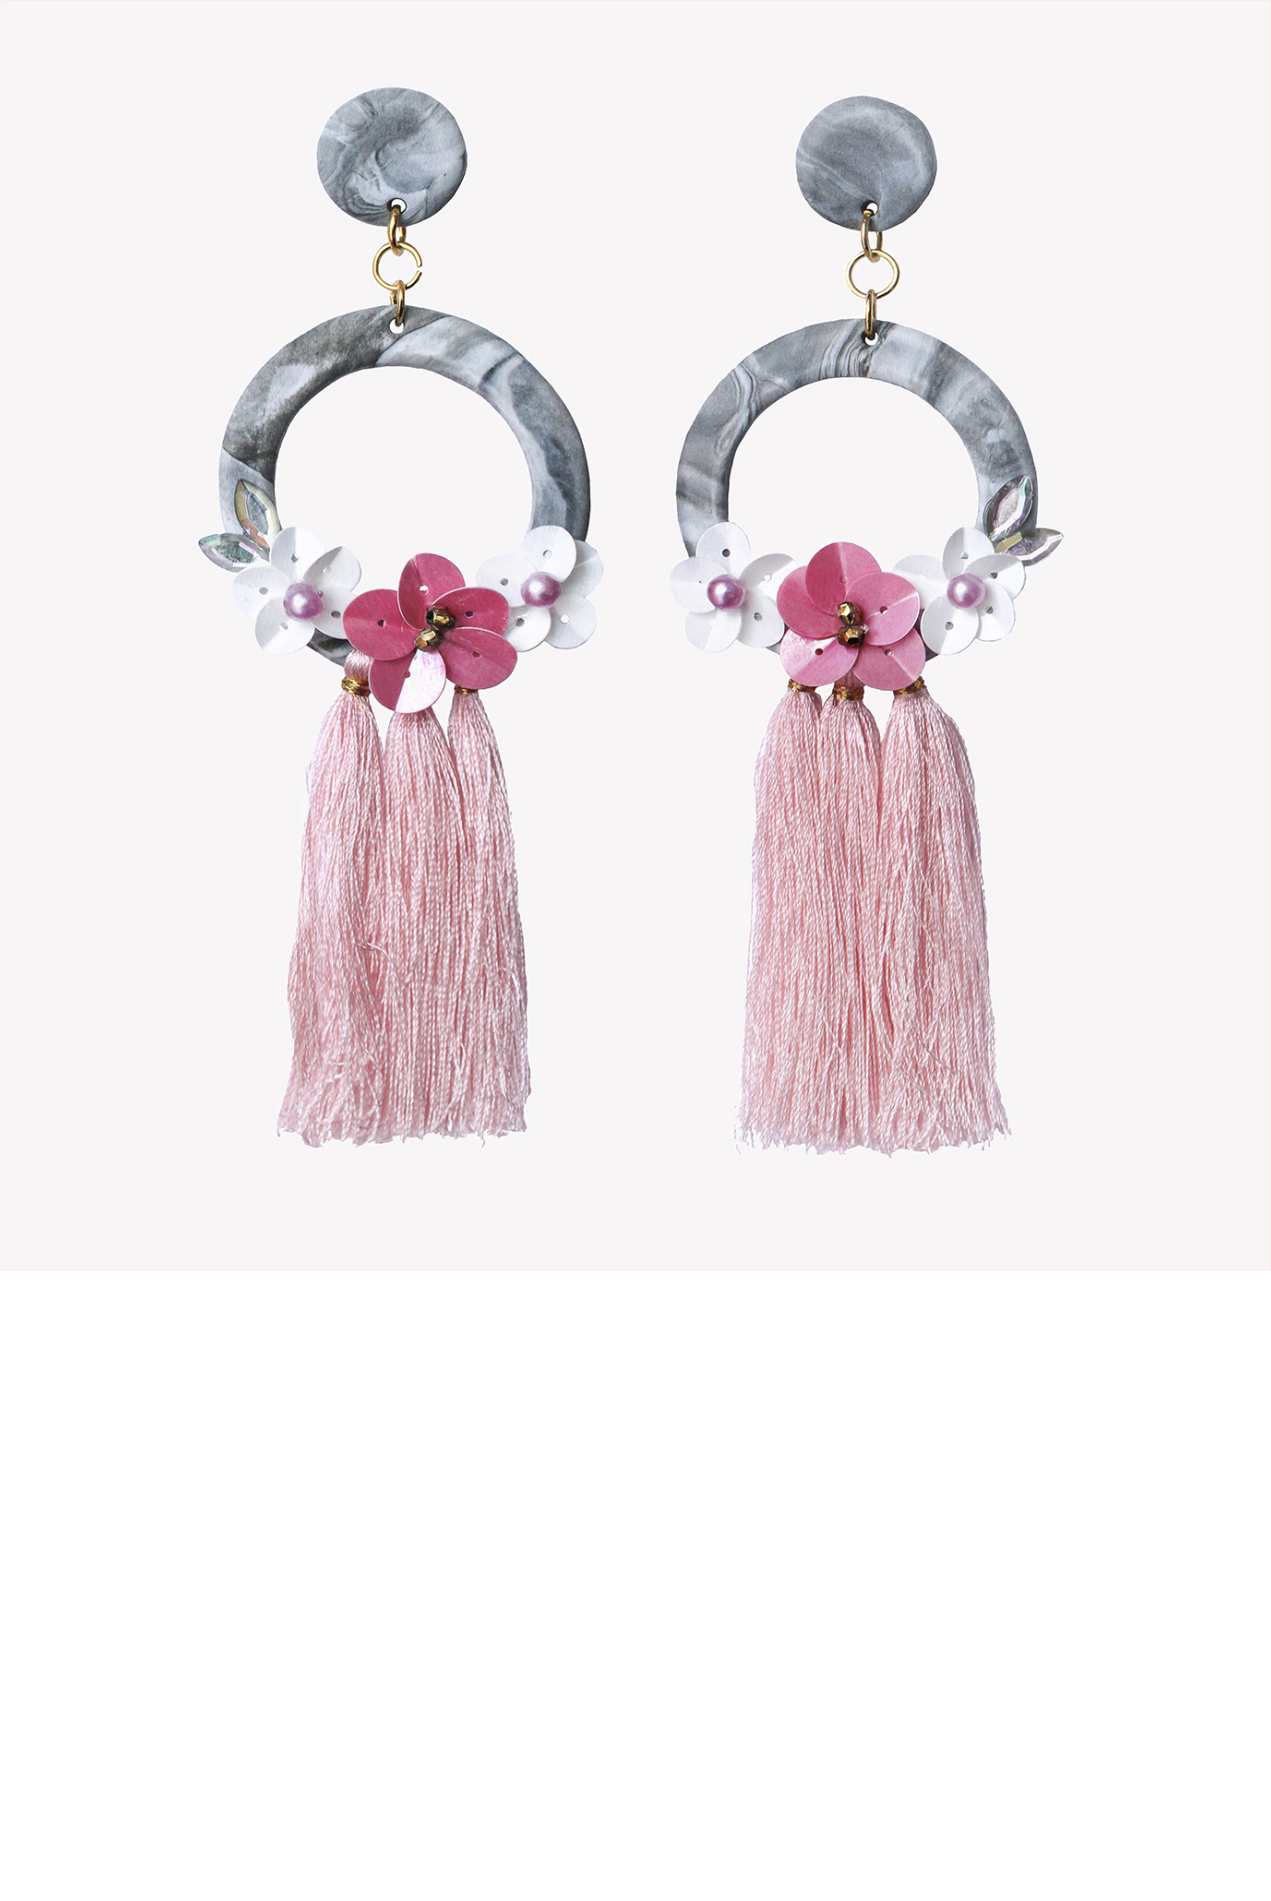 Marble earrings with tassels, sequin flowers & gems